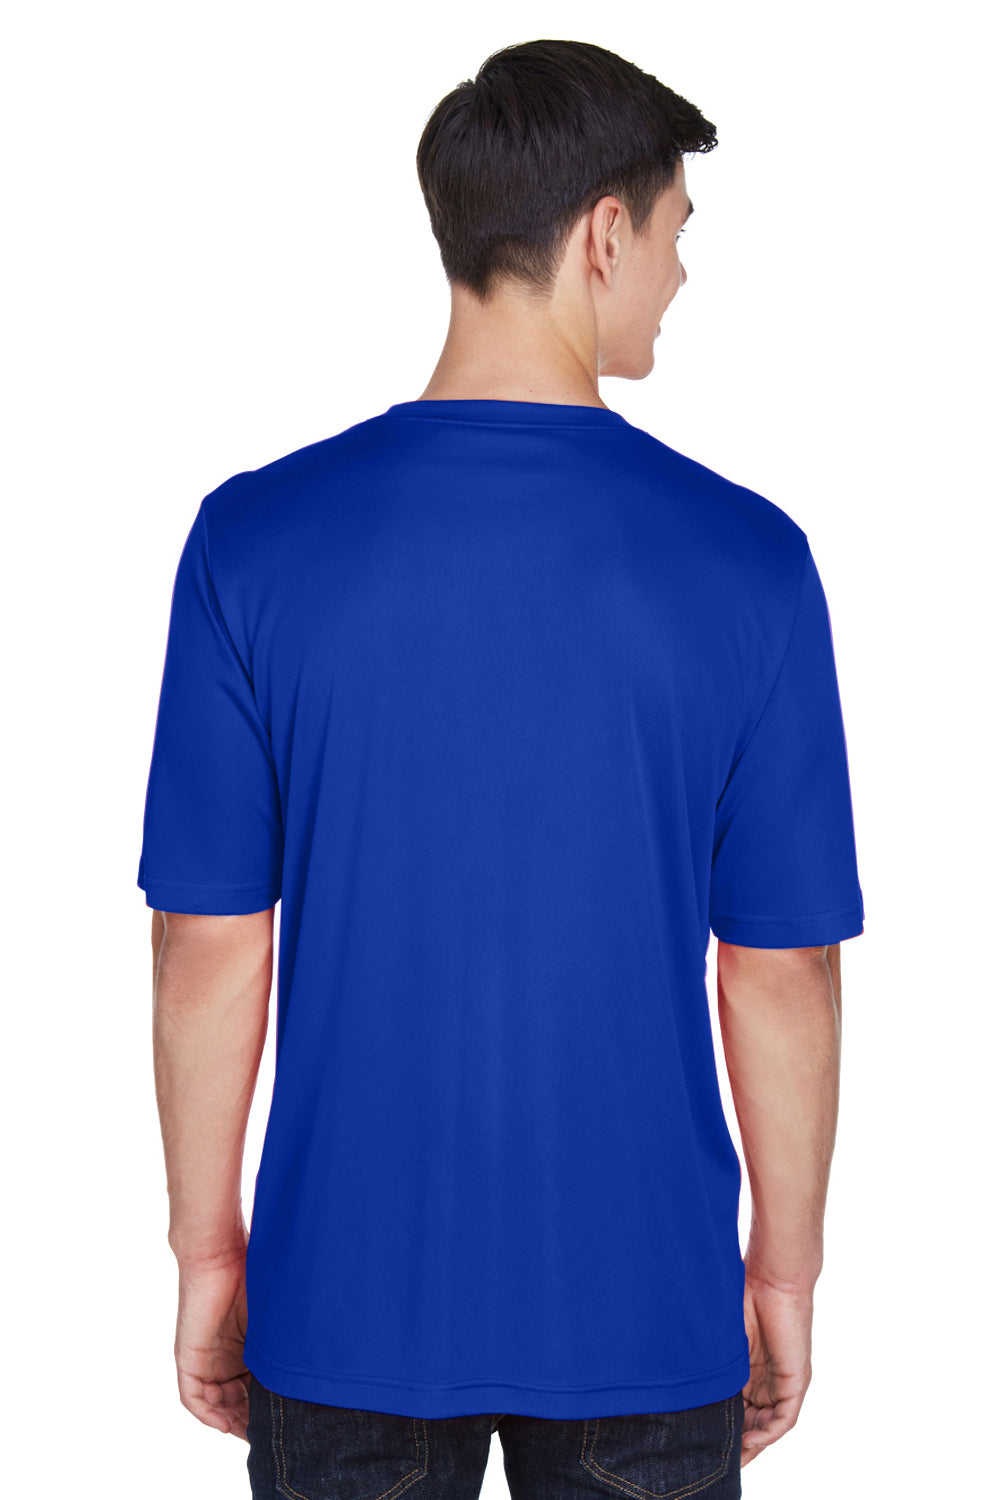 Team 365 TT11 Mens Zone Performance Moisture Wicking Short Sleeve Crewneck T-Shirt Royal Blue Back